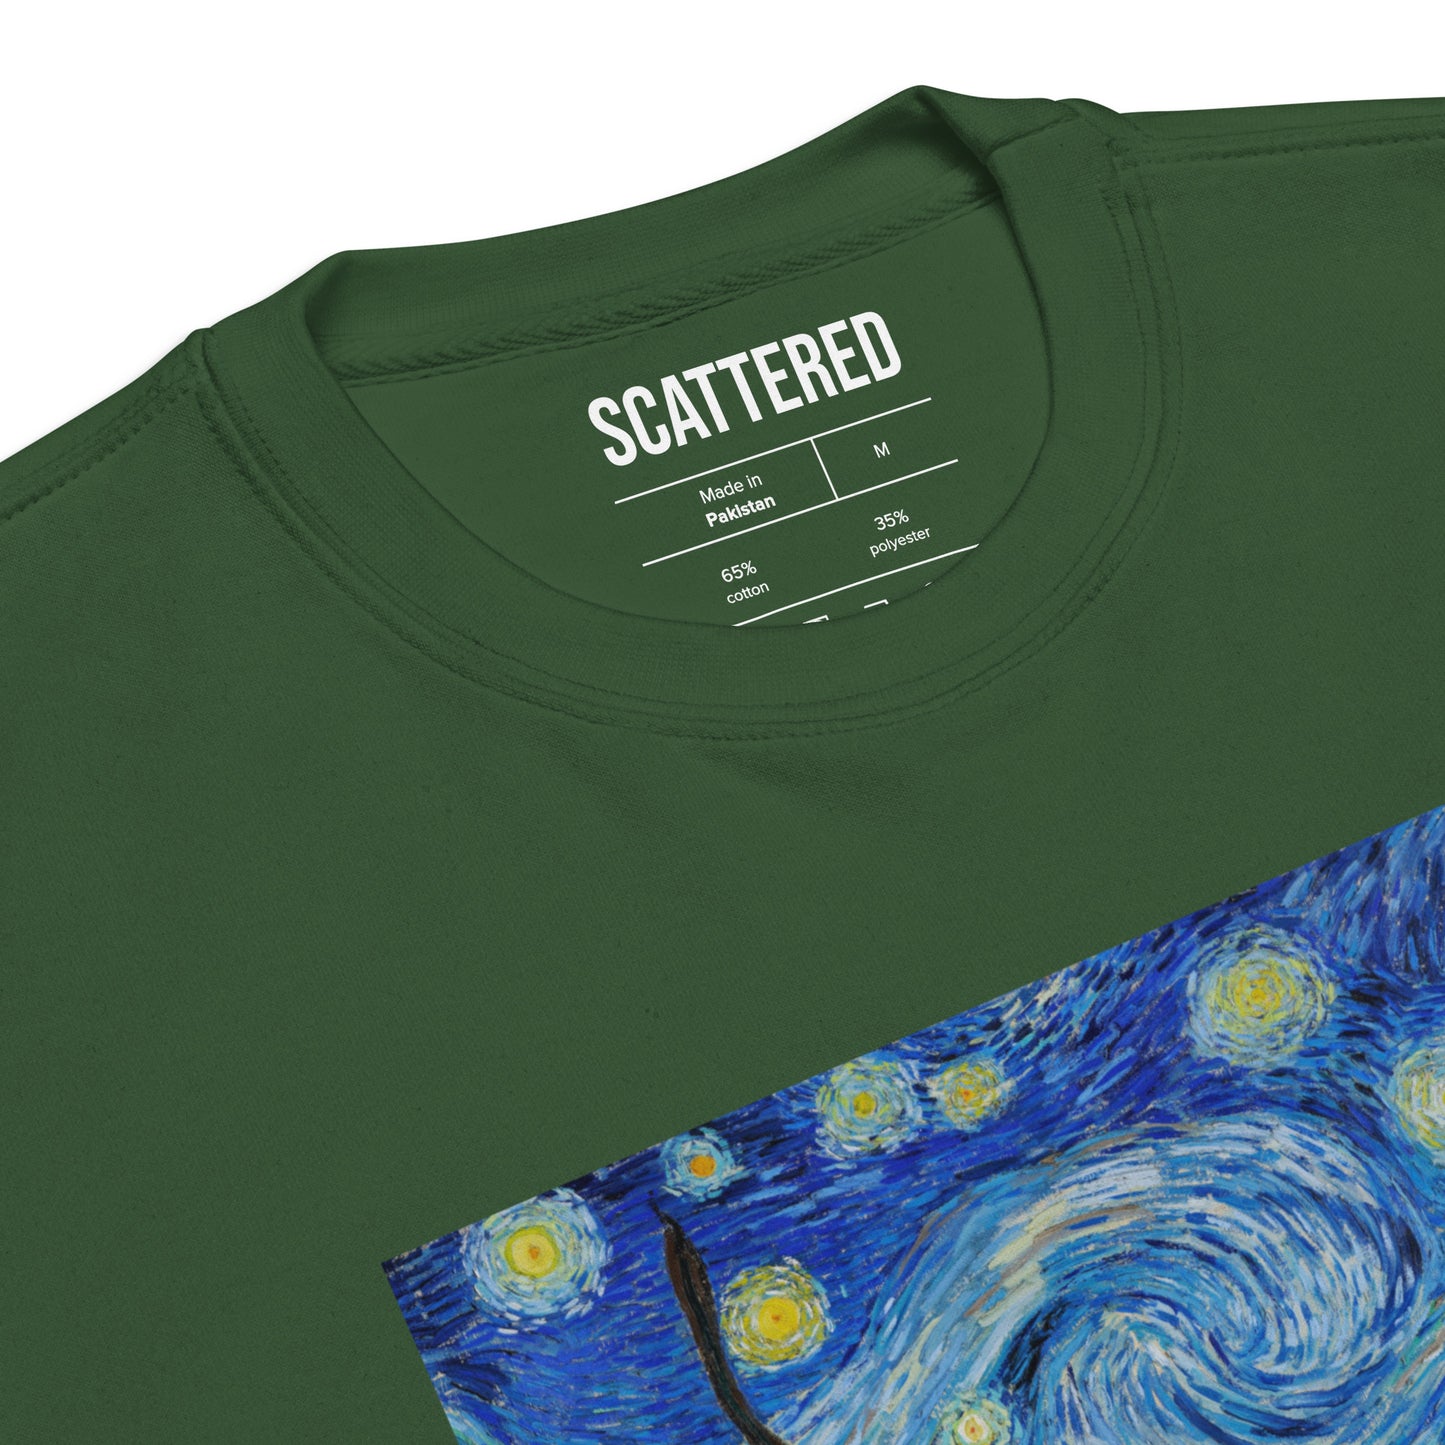 Vincent Van Gogh The Starry Night Painting Printed Premium Crewneck Sweatshirt